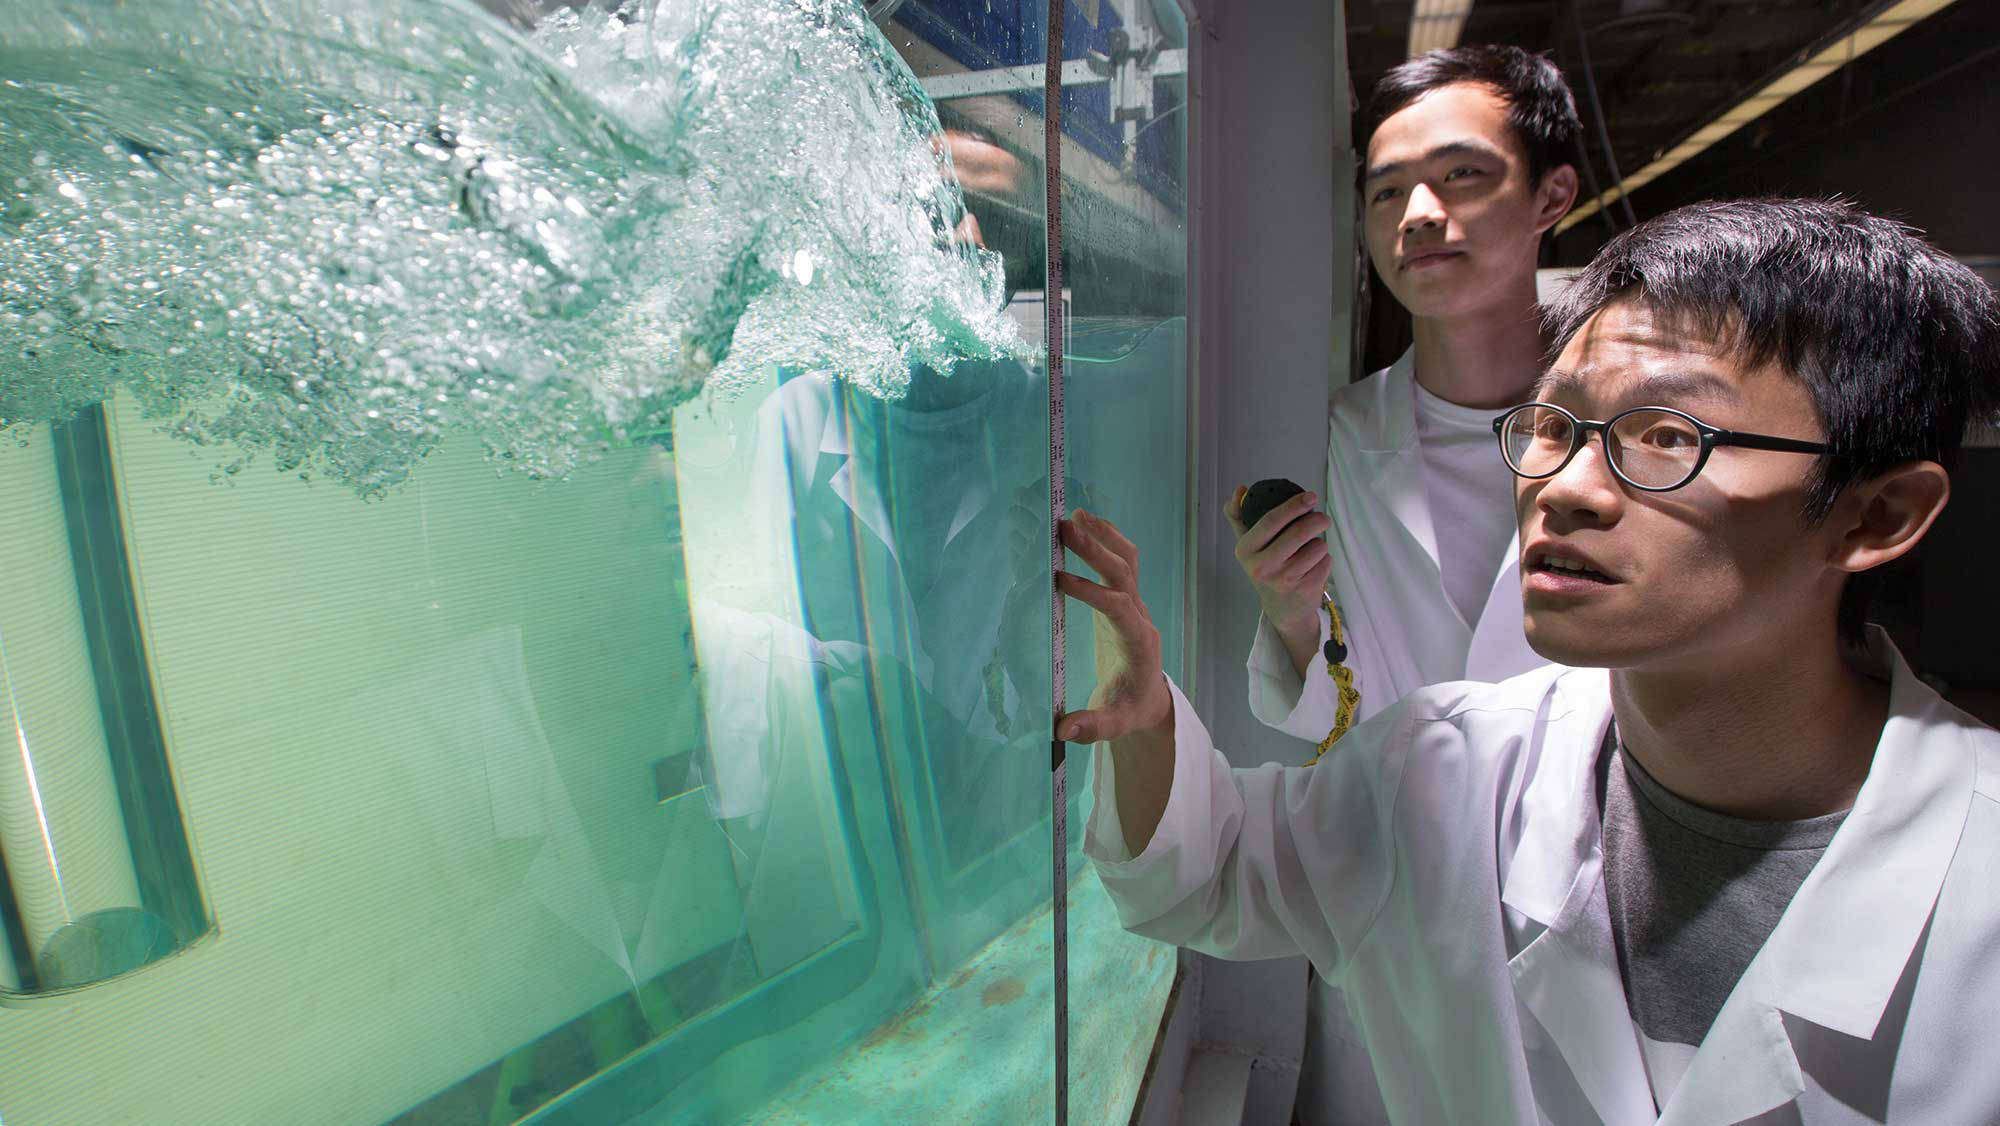 Two men in lab coats testing water flow.